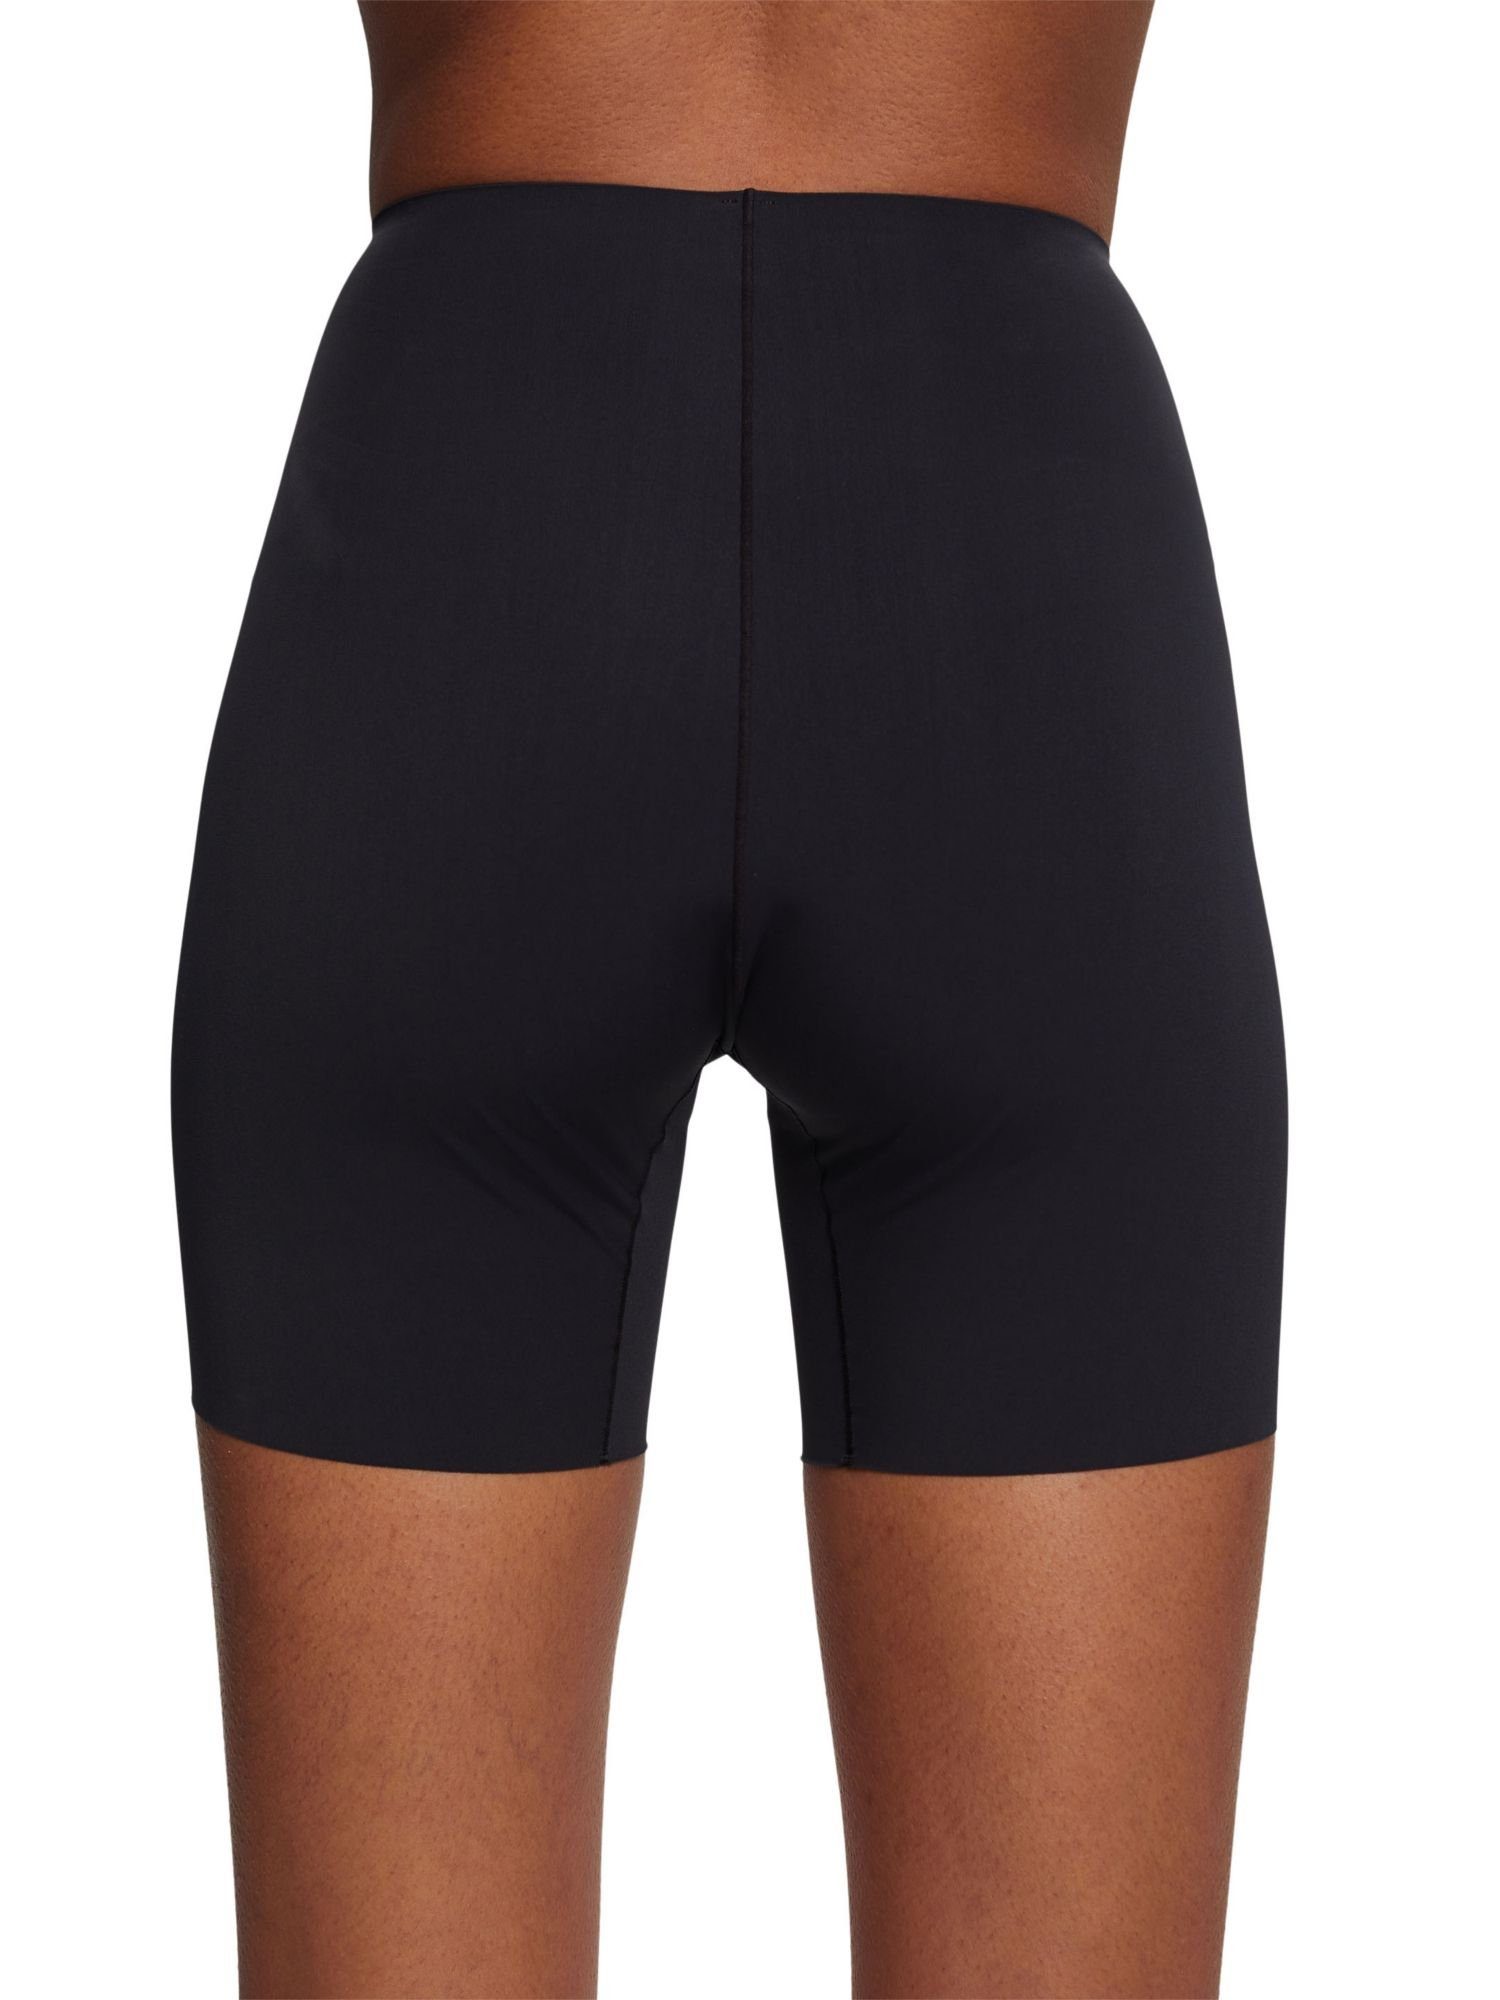 Esprit Hipster BLACK Shorts mit Shaping-Effekt Recycelt: dezentem